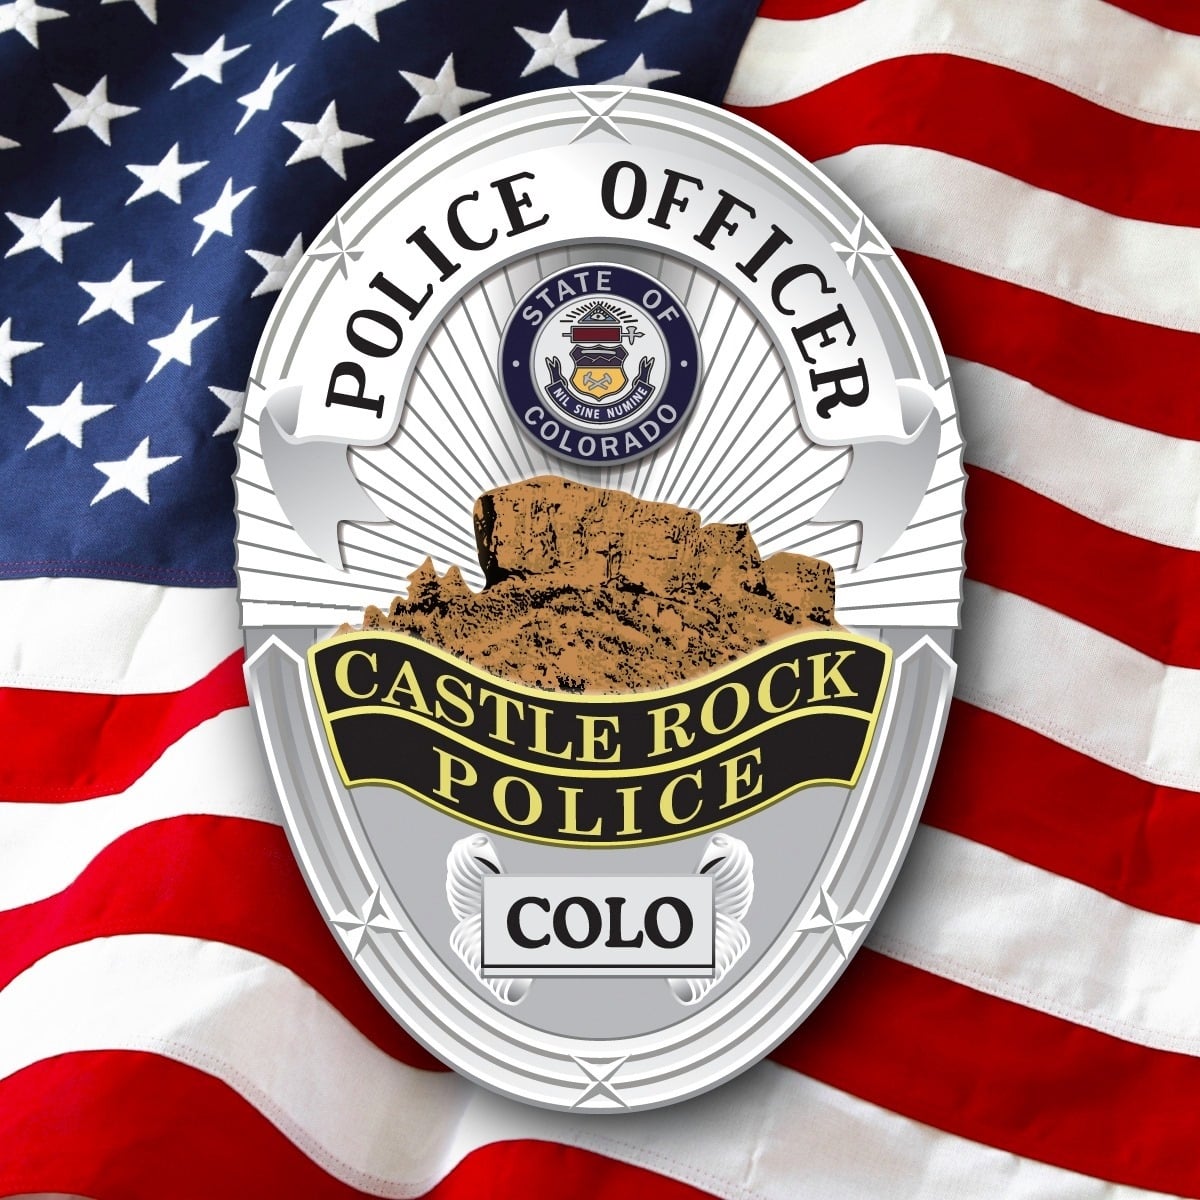 Online Crash Reports for Castle Rock Police Department